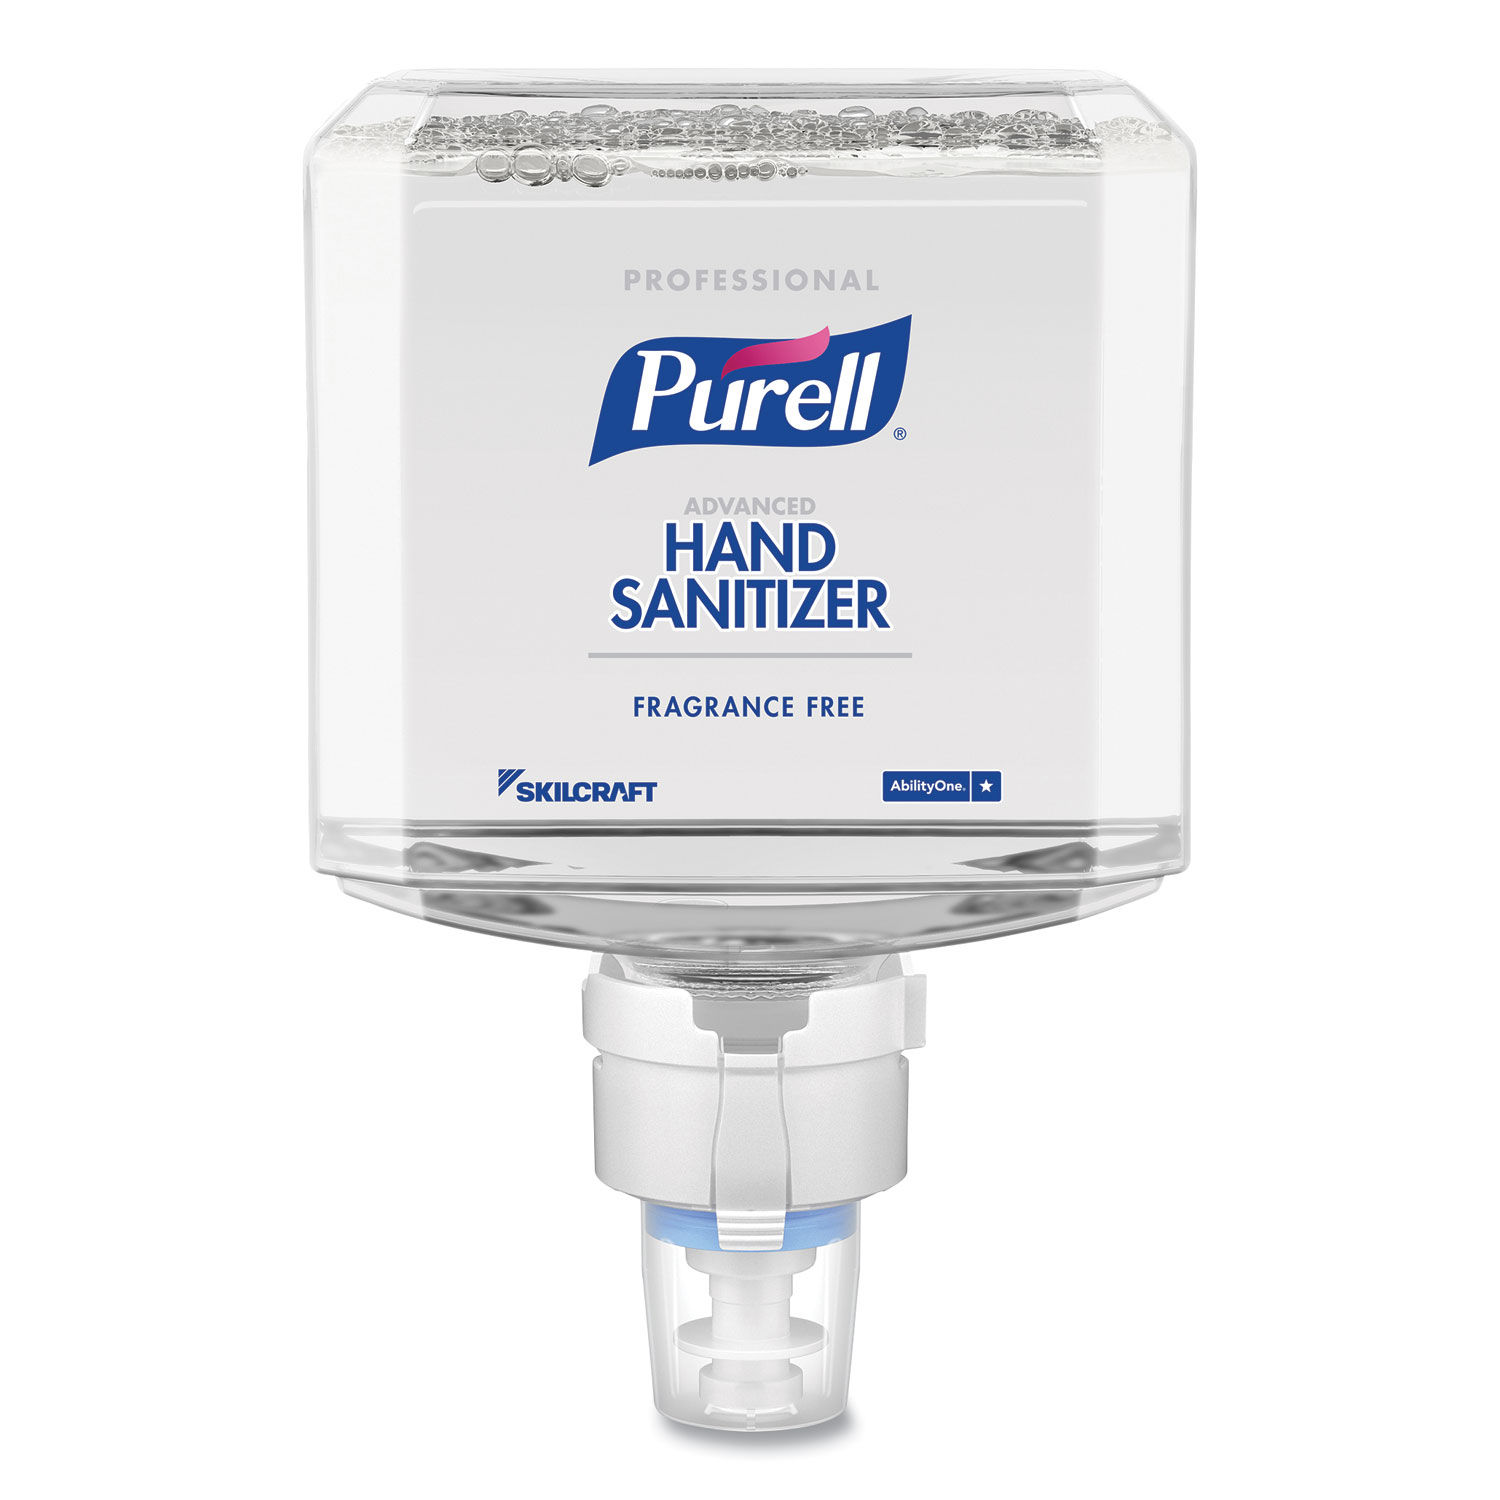 SKILCRAFT PURELL Professional Advanced Refill Foam Hand Sanitizer 1,200 mL, 2/Box, GSA 8520016842496